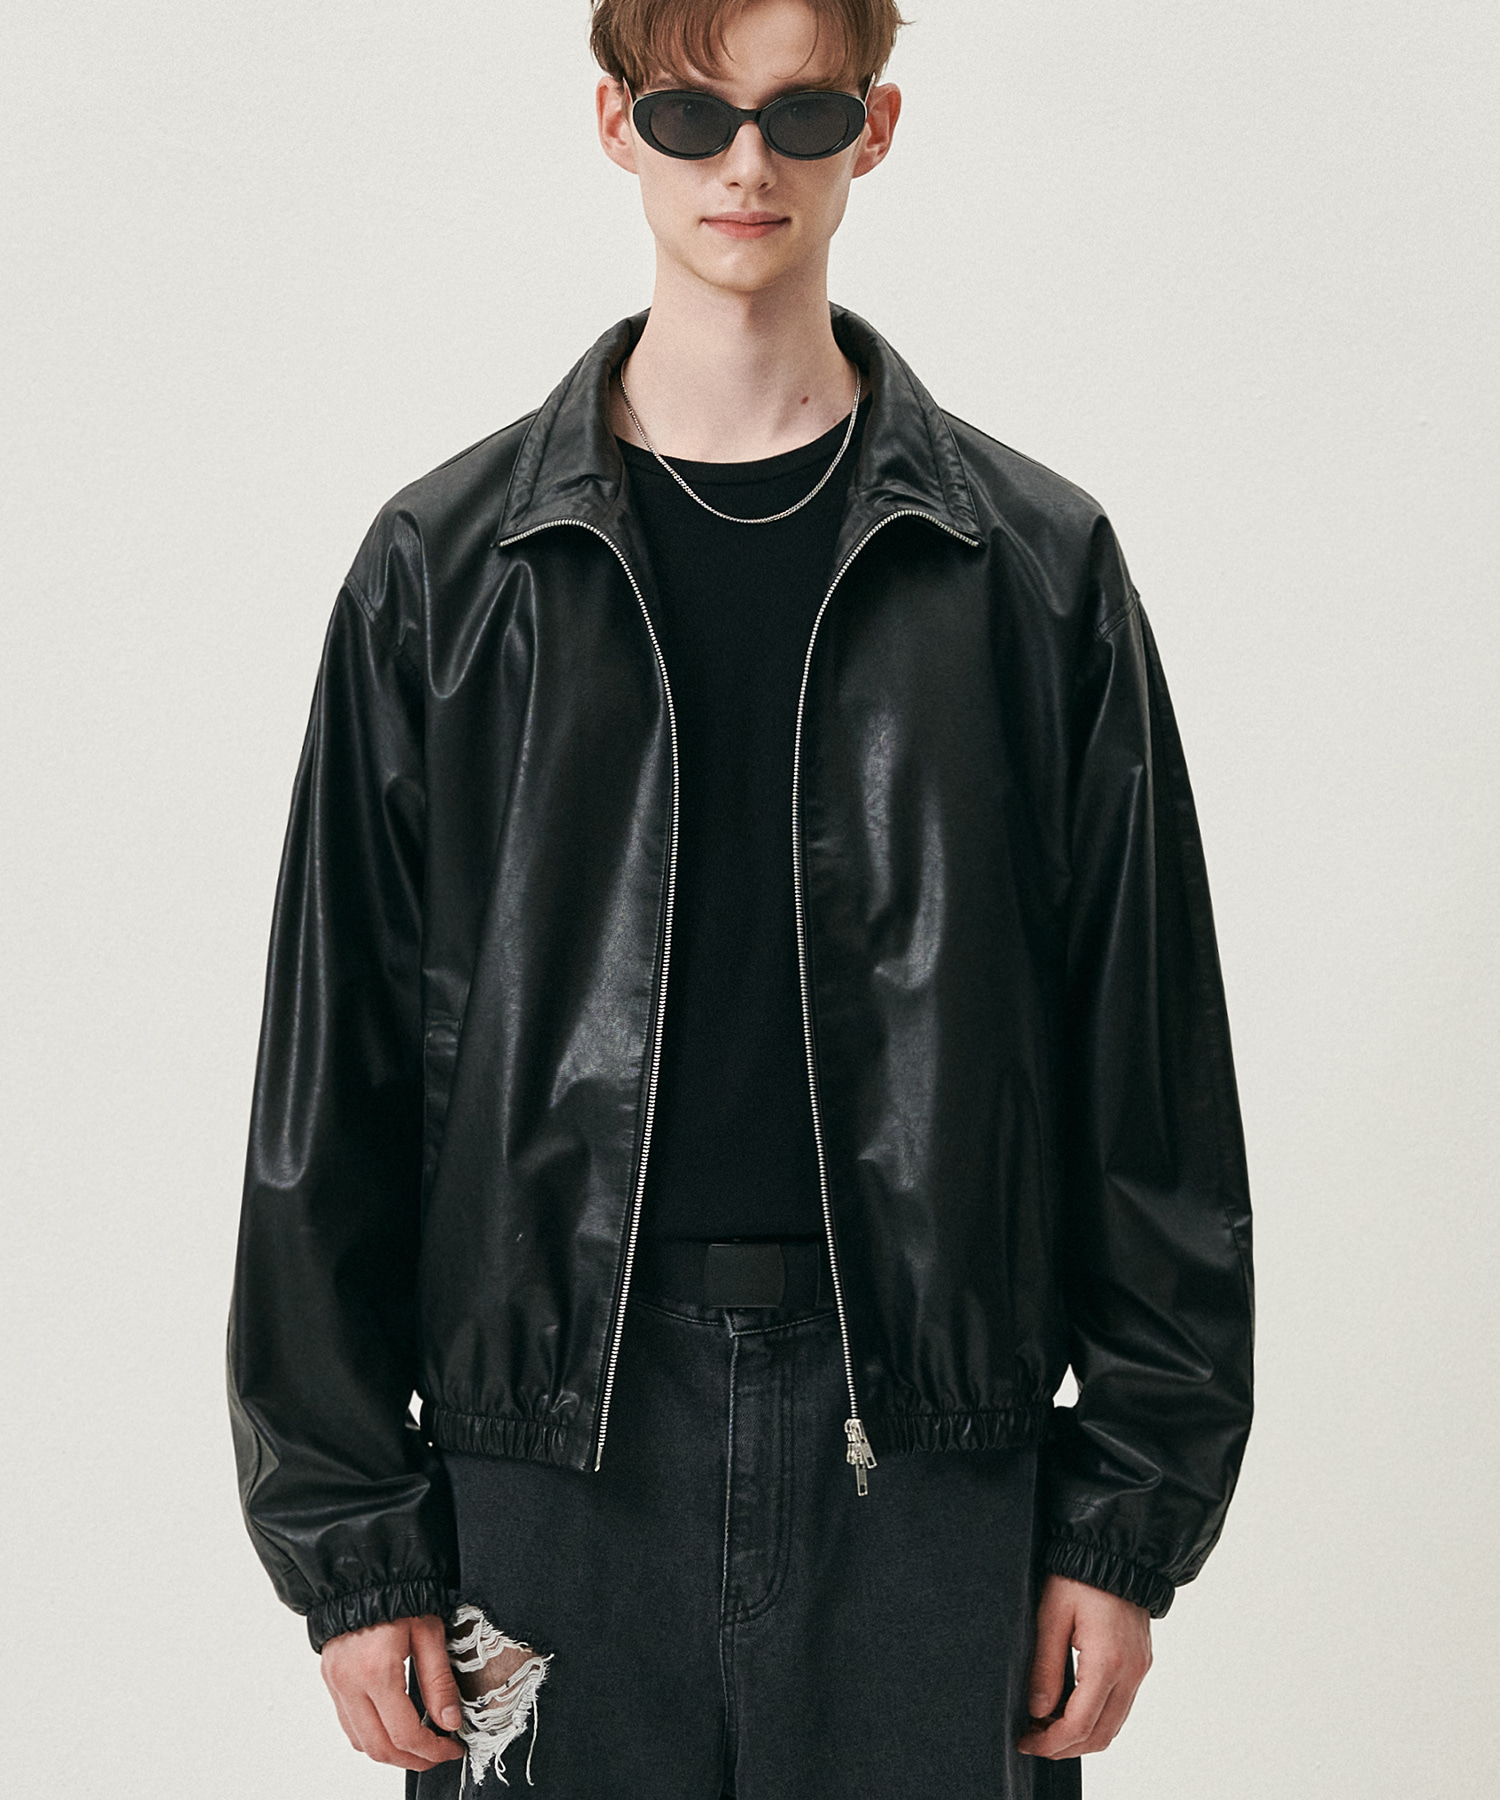 Overfit vegan leather windbreaker jacket (black)